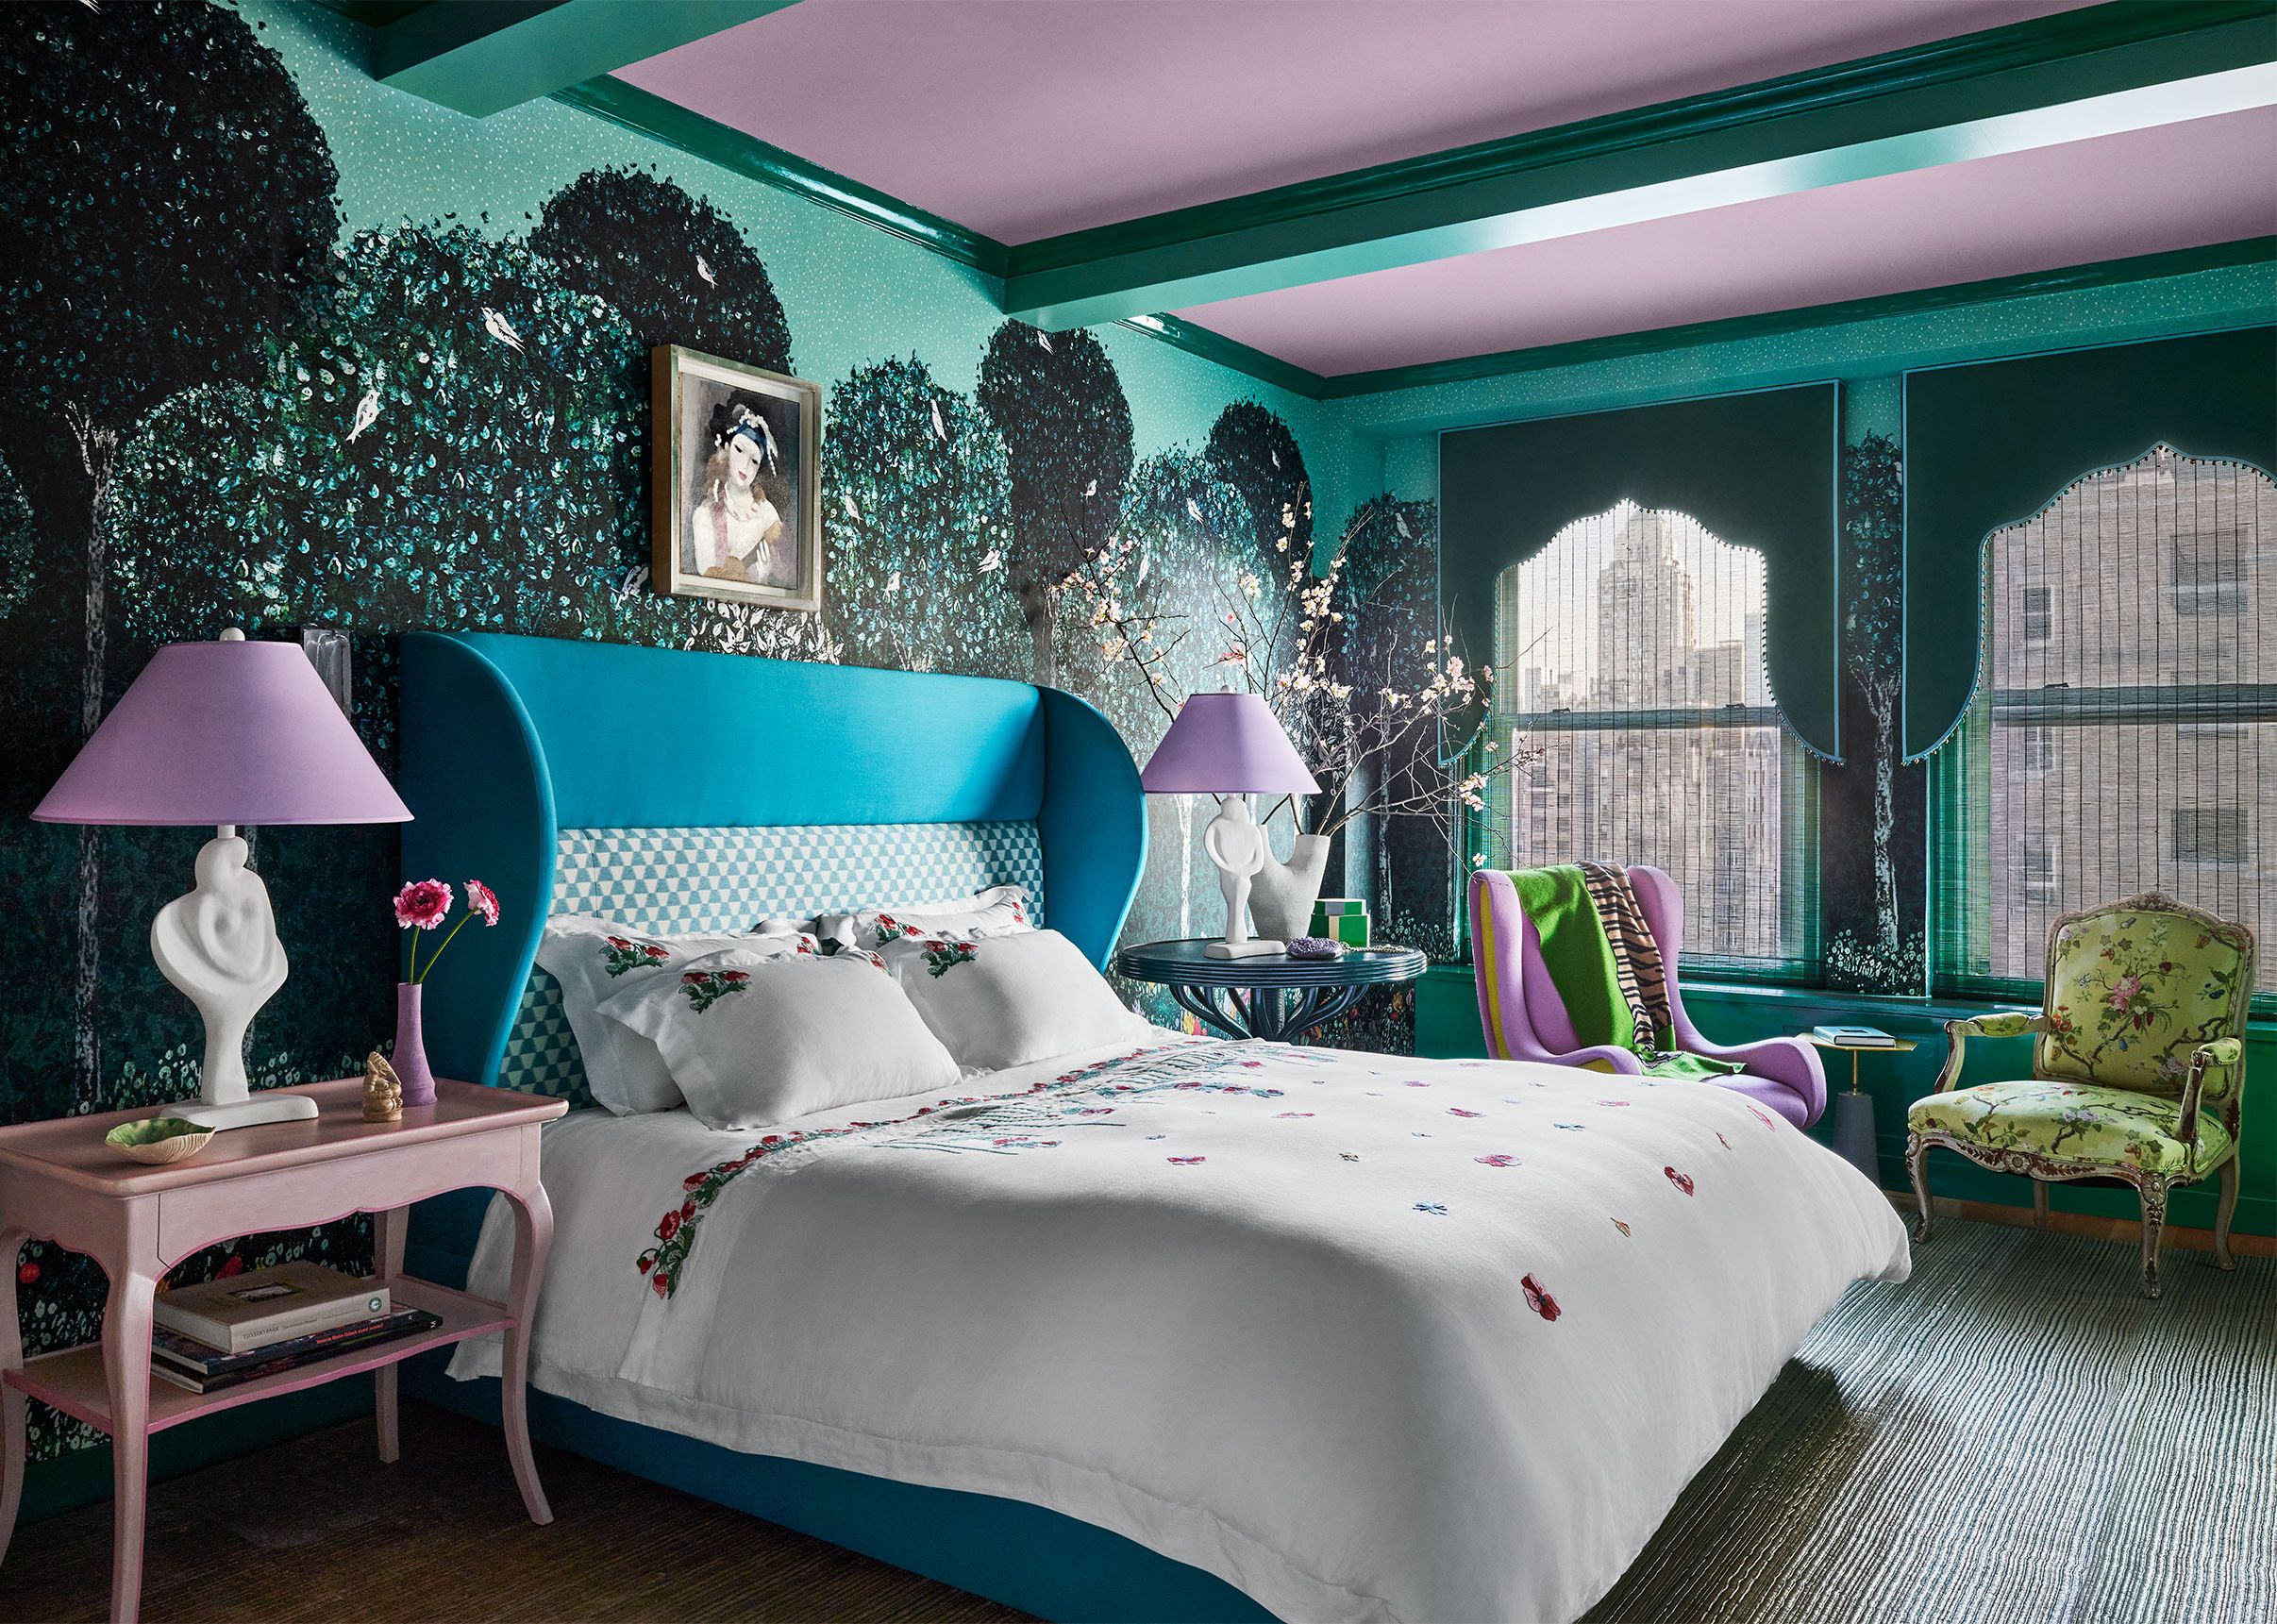 13 bedroom wallpaper ideas to transform plain walls | Wallpaper design for  bedroom, Wallpaper bedroom, Wallpaper walls bedroom